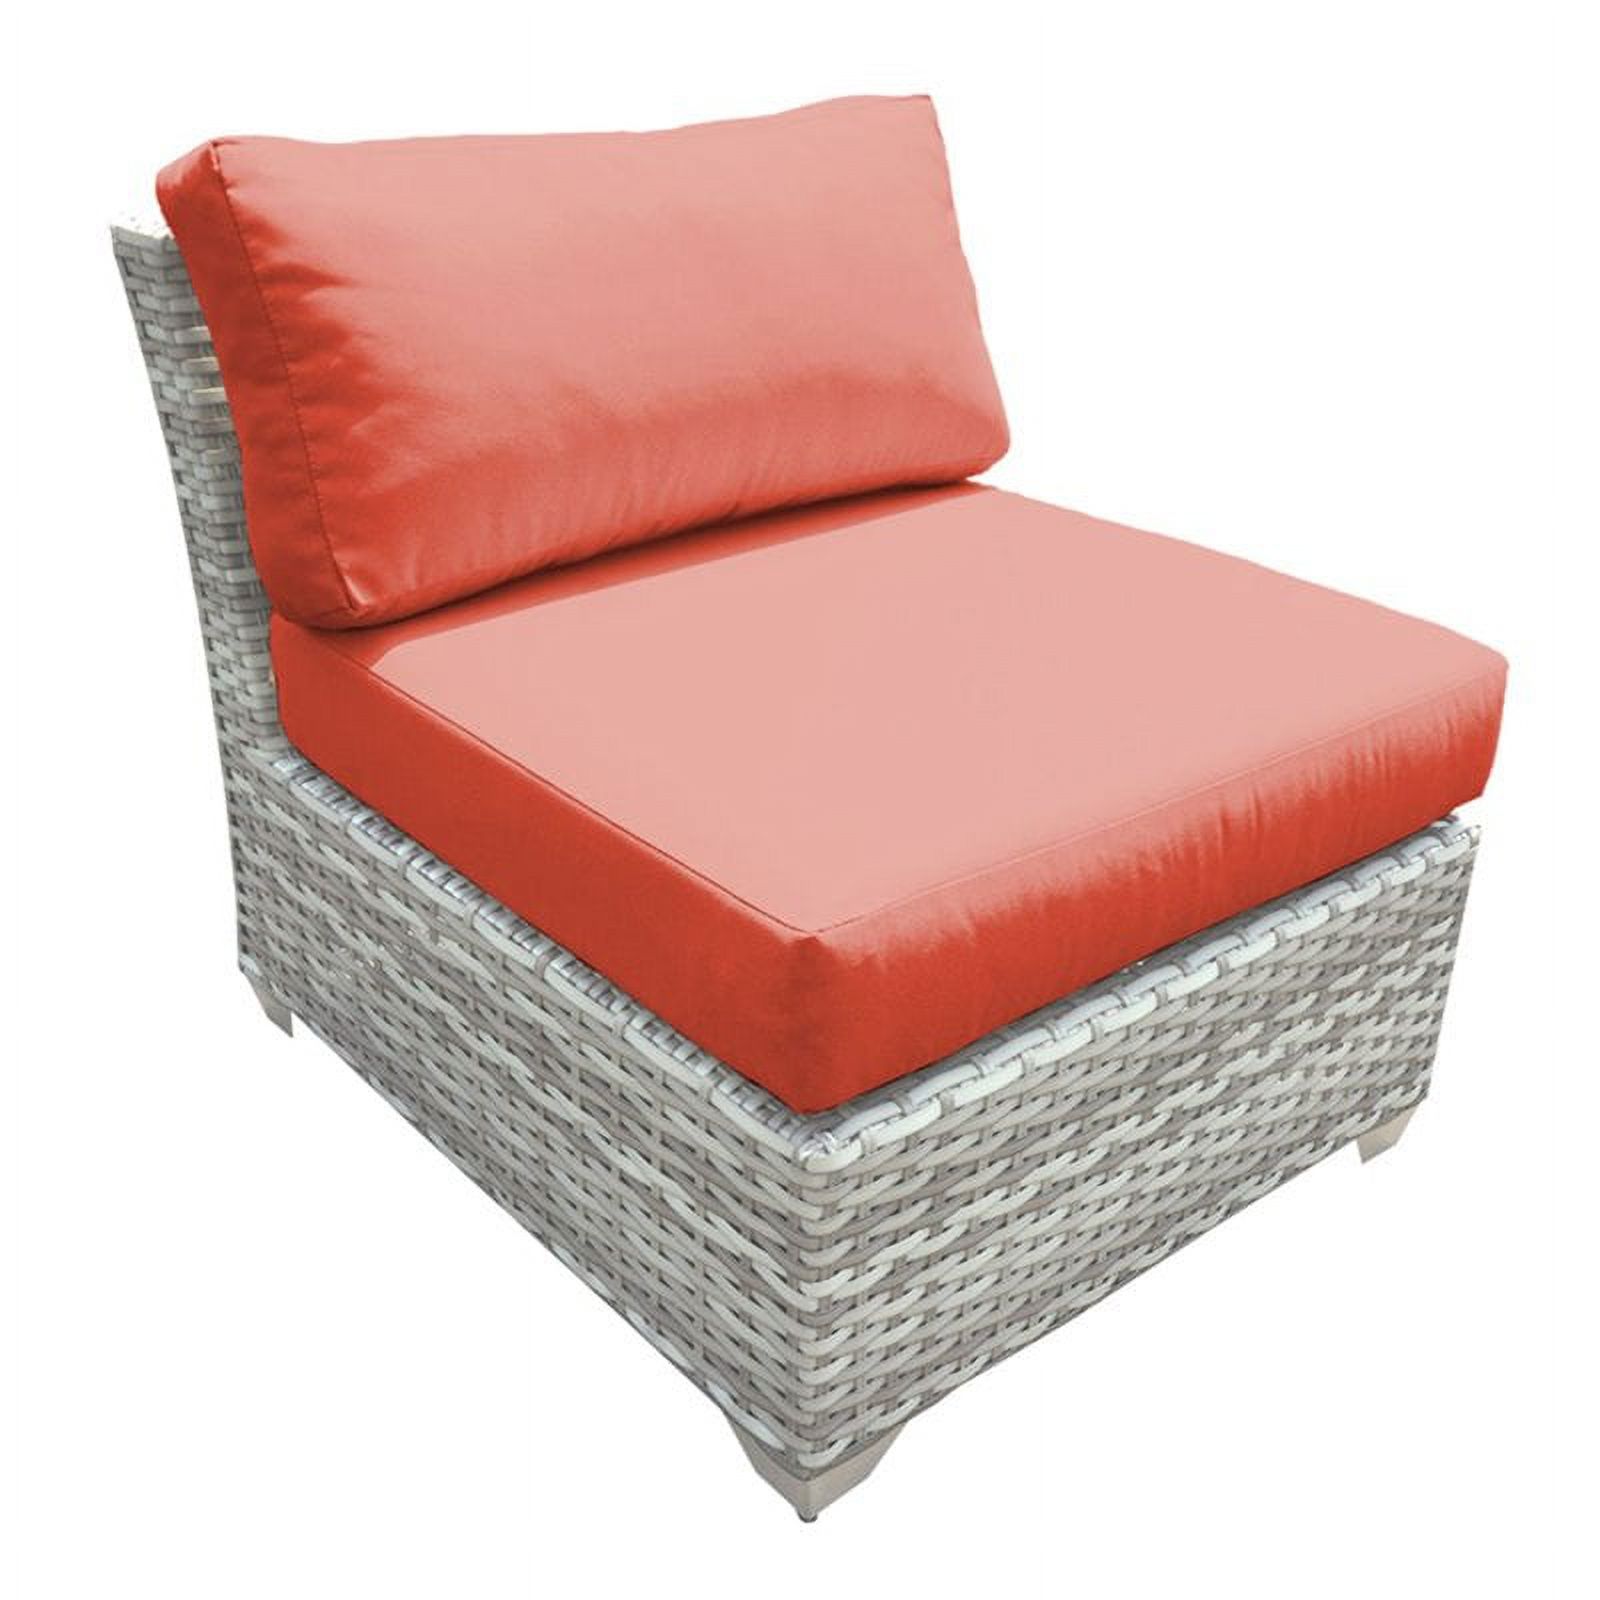 TKC Fairmont Armless Patio Chair in Orange (Set of 2) - image 1 of 2